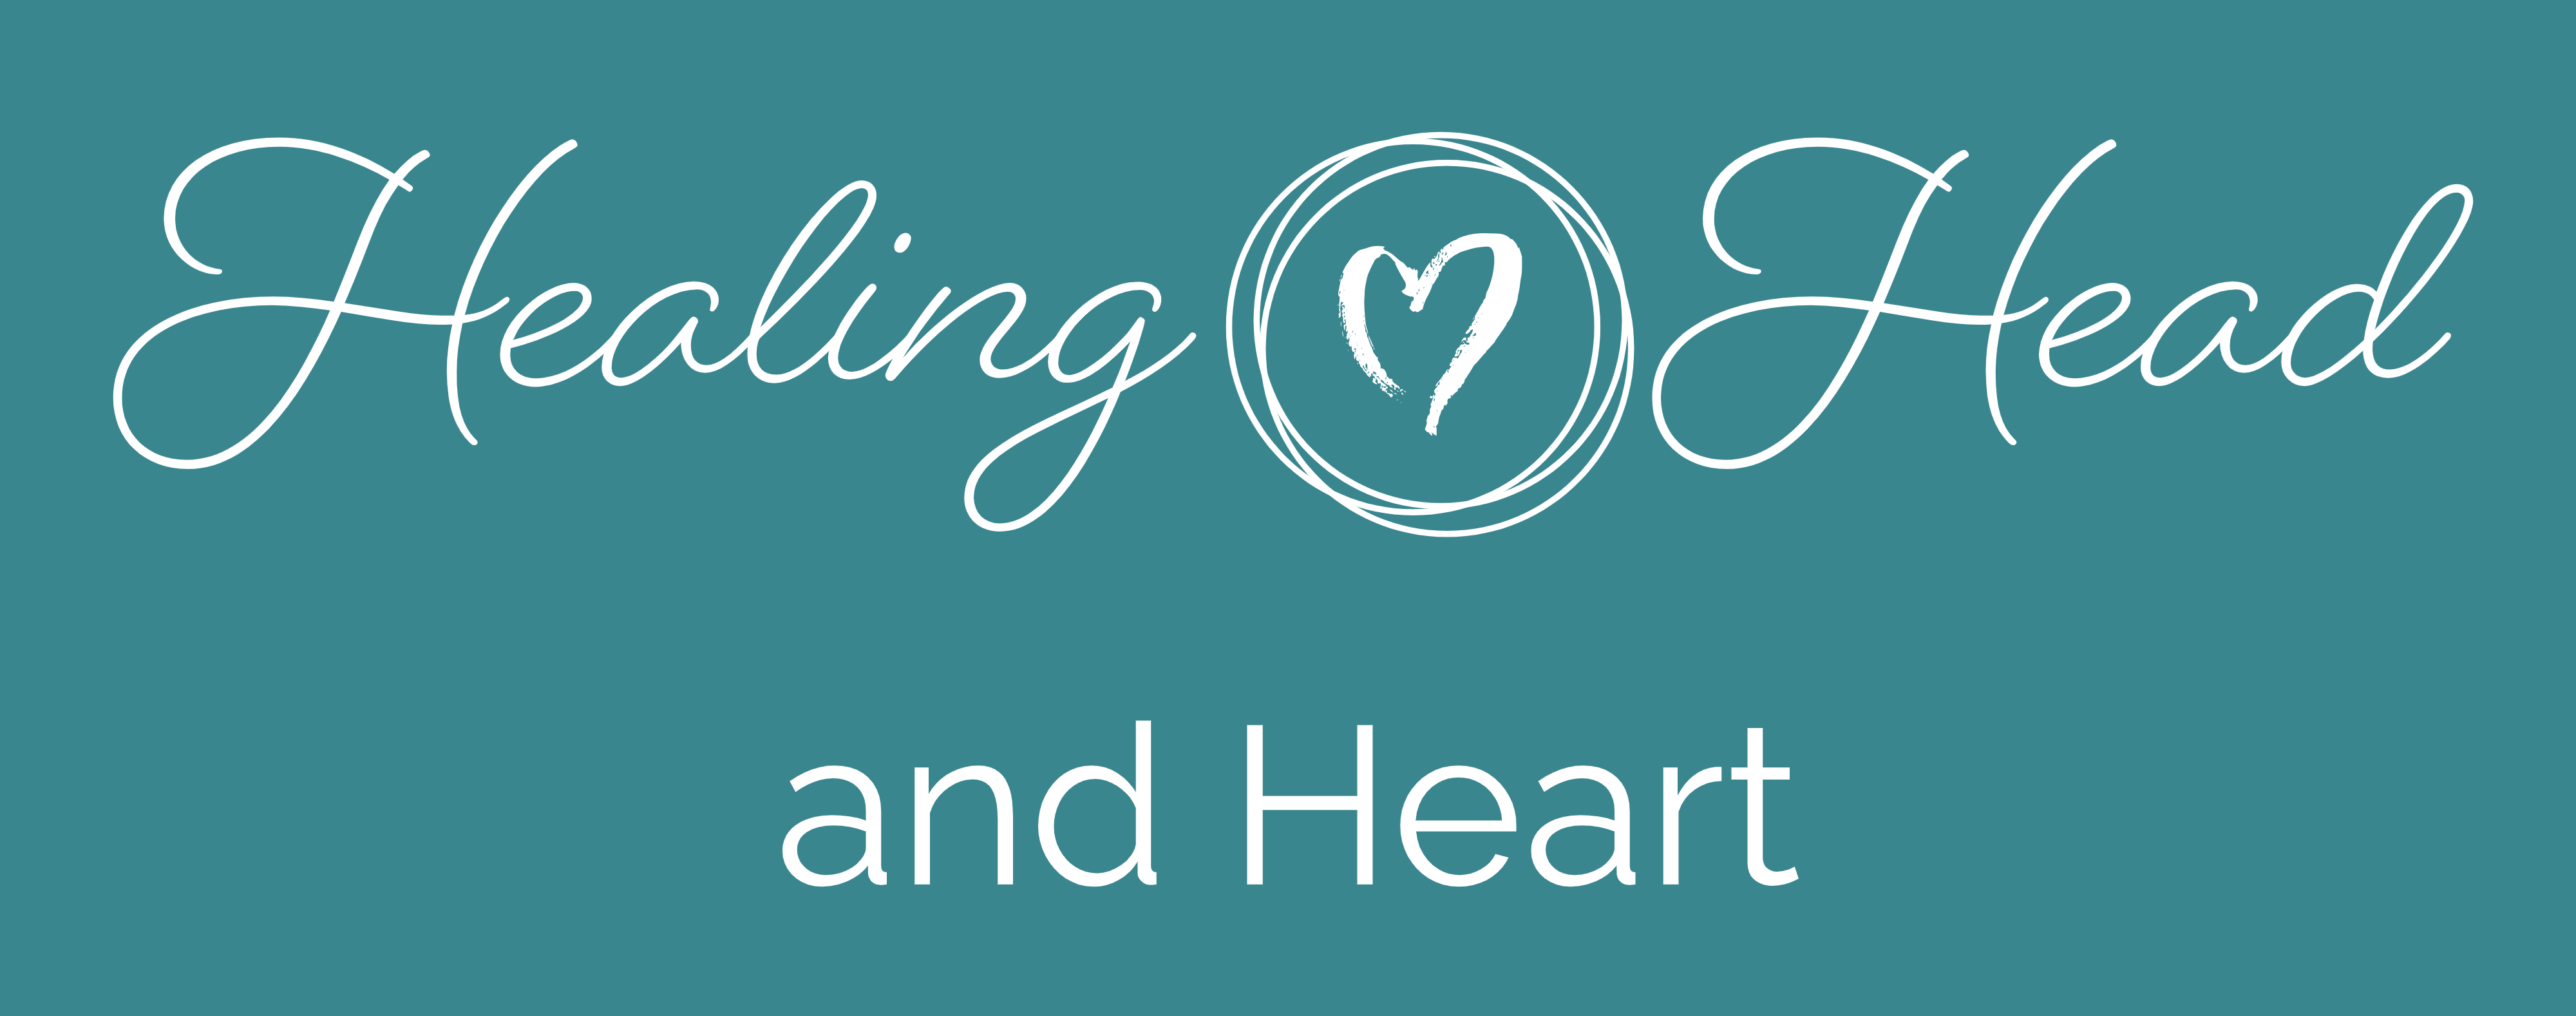 Healing Head and Heart